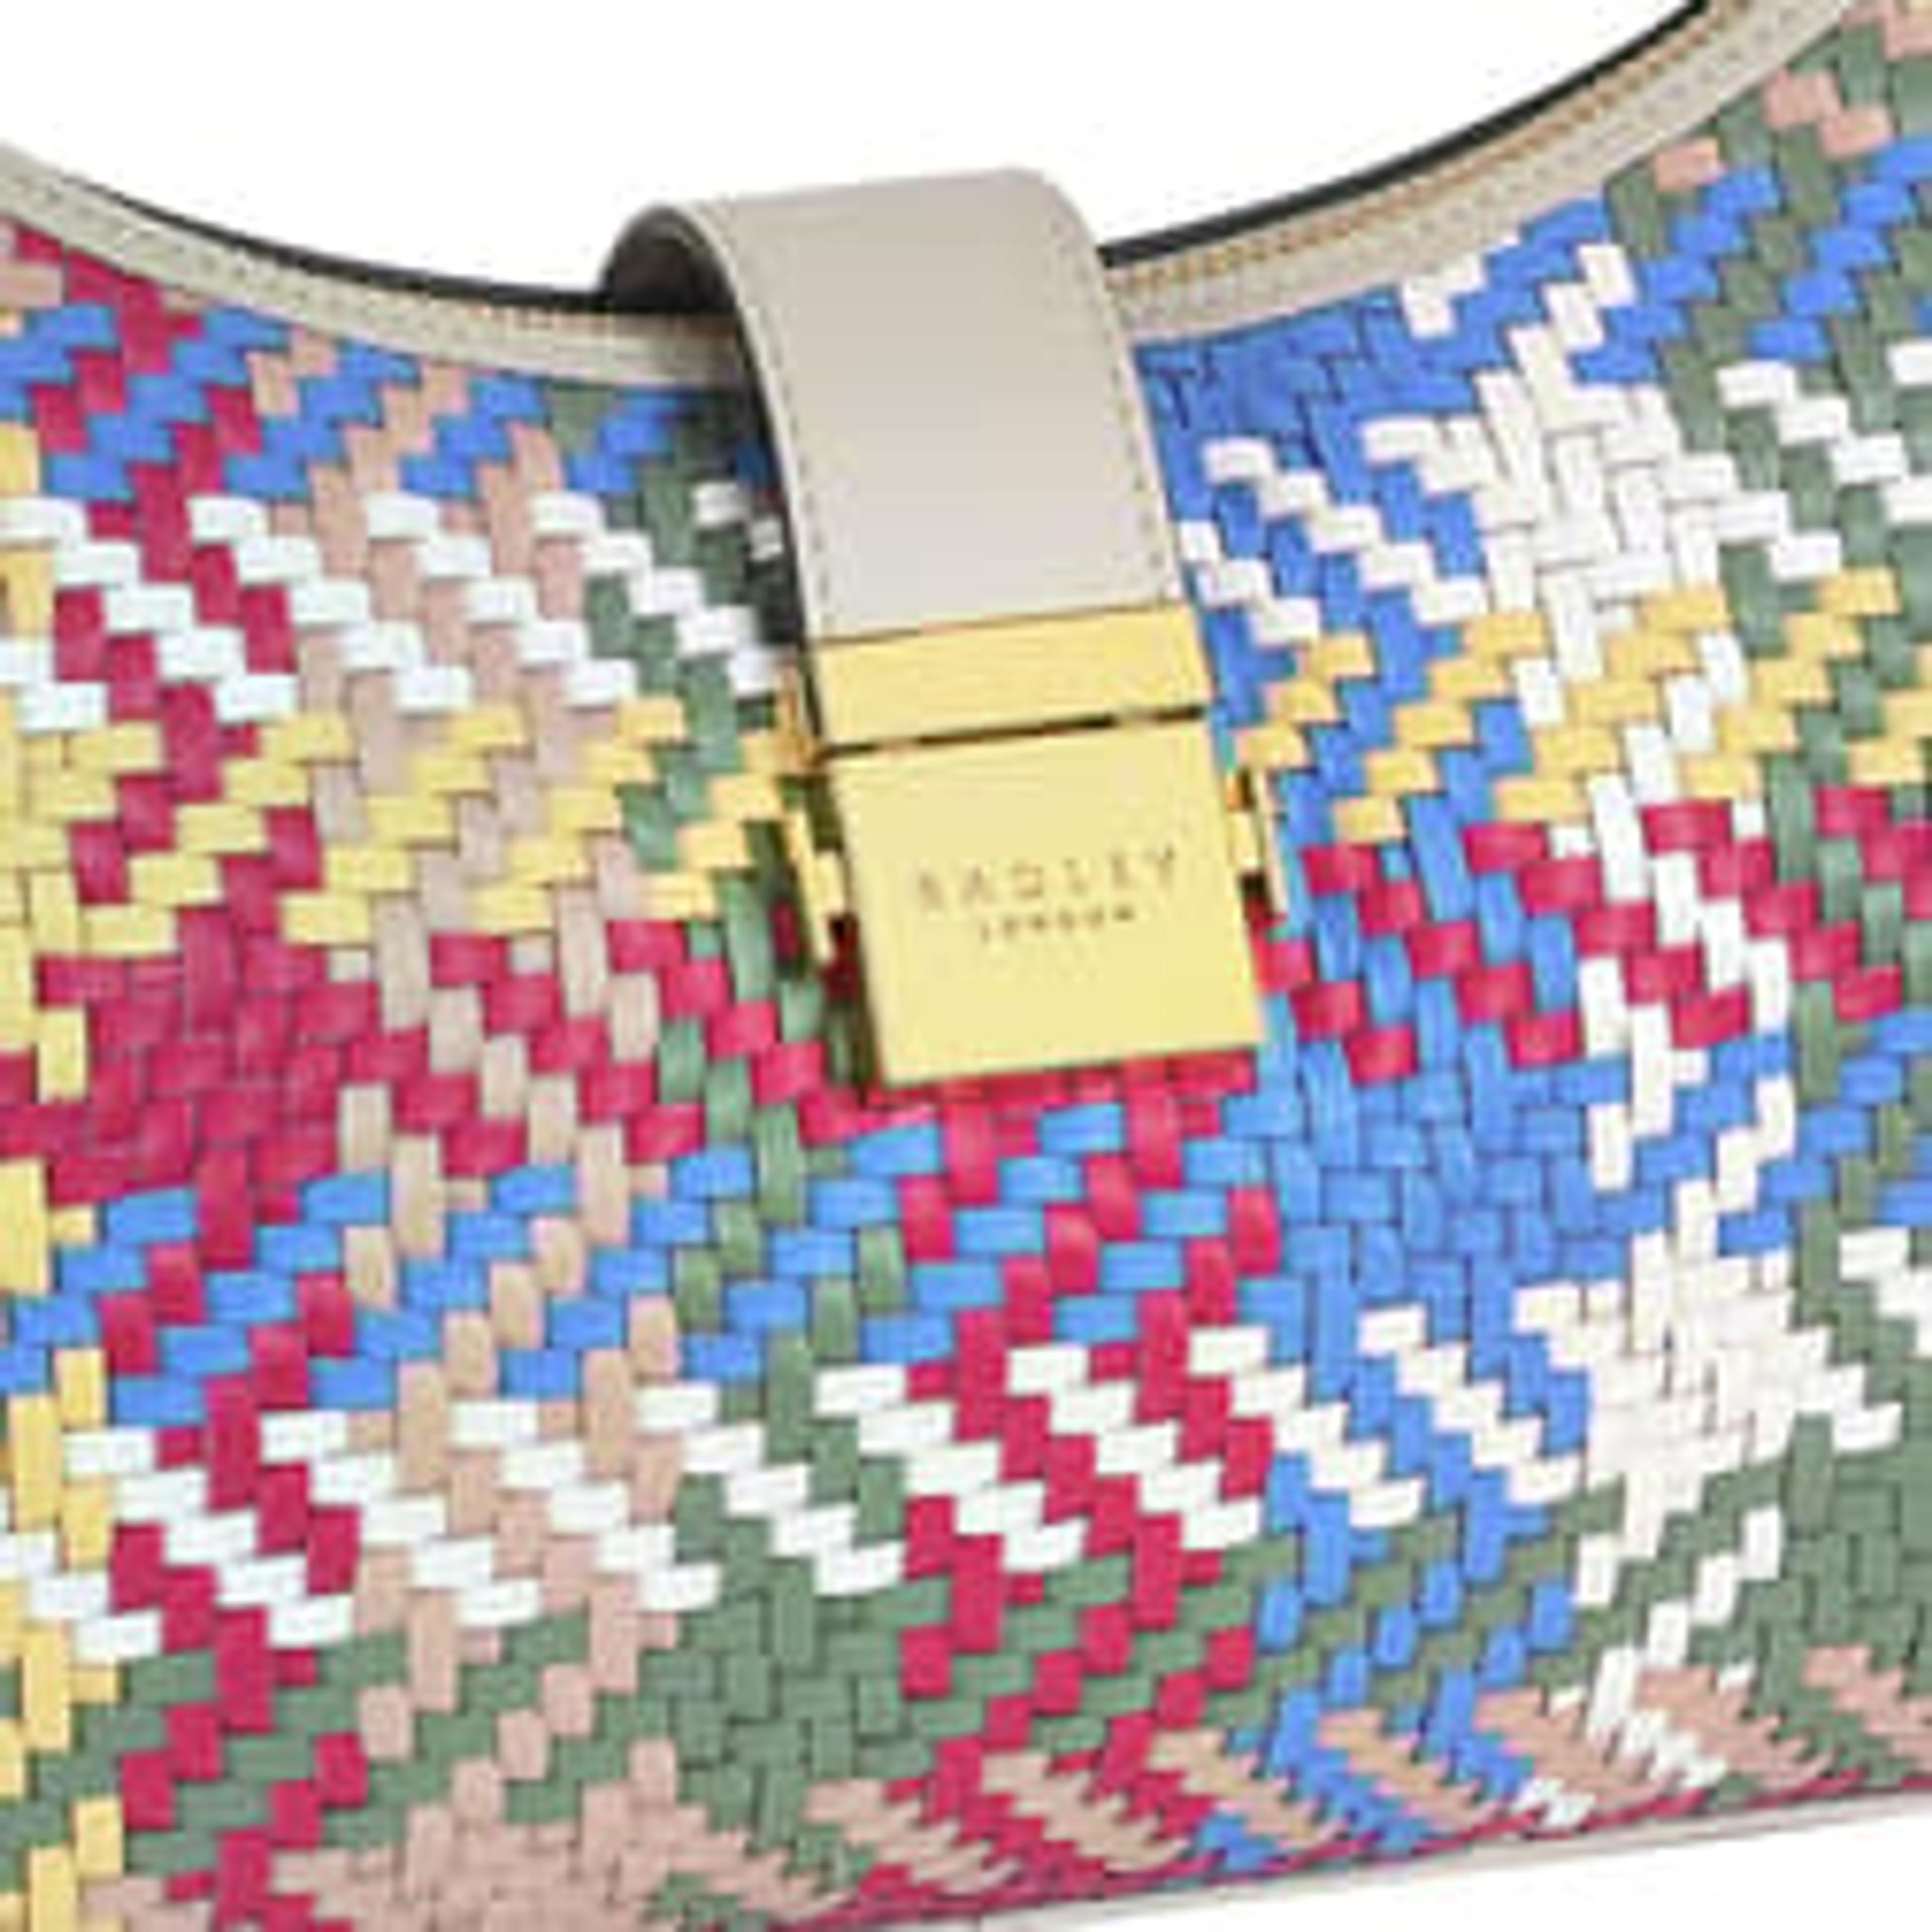 Light Beige Sloane Street Medium Ziptop Shoulder Bag - Our Buyers Top Gifting Picks For Her - Sales - Women - BrandAlley